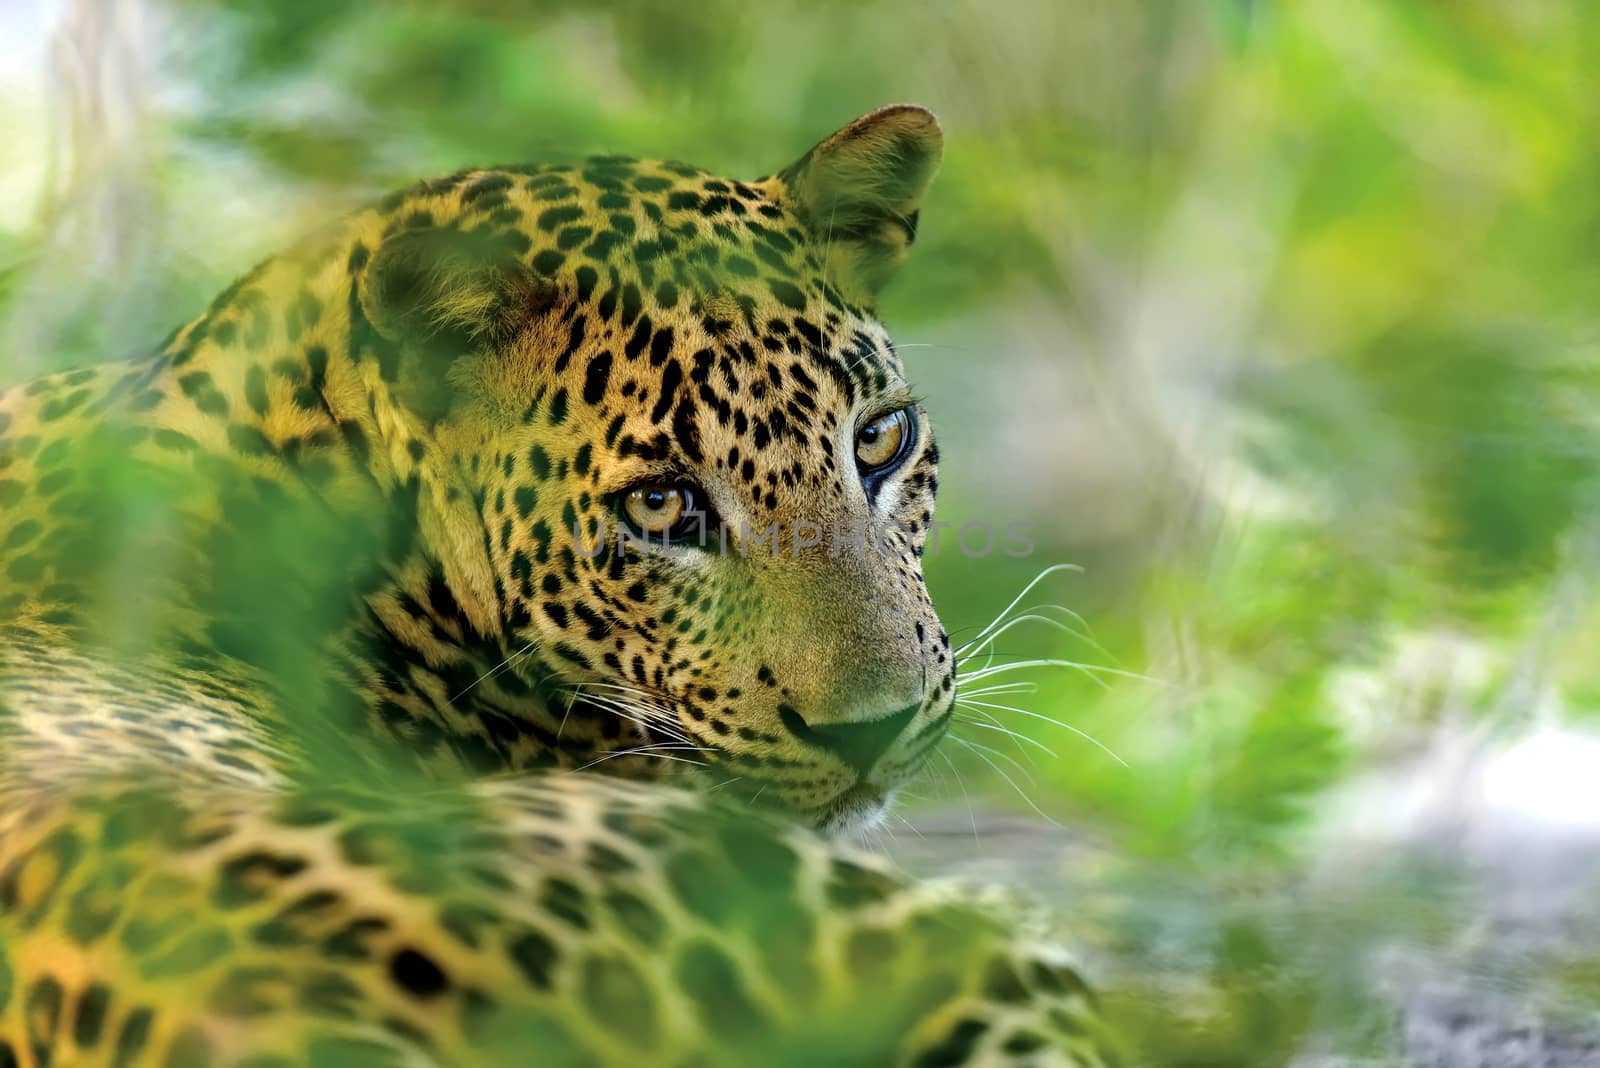 Leopard in the wild on the island of Sri Lanka